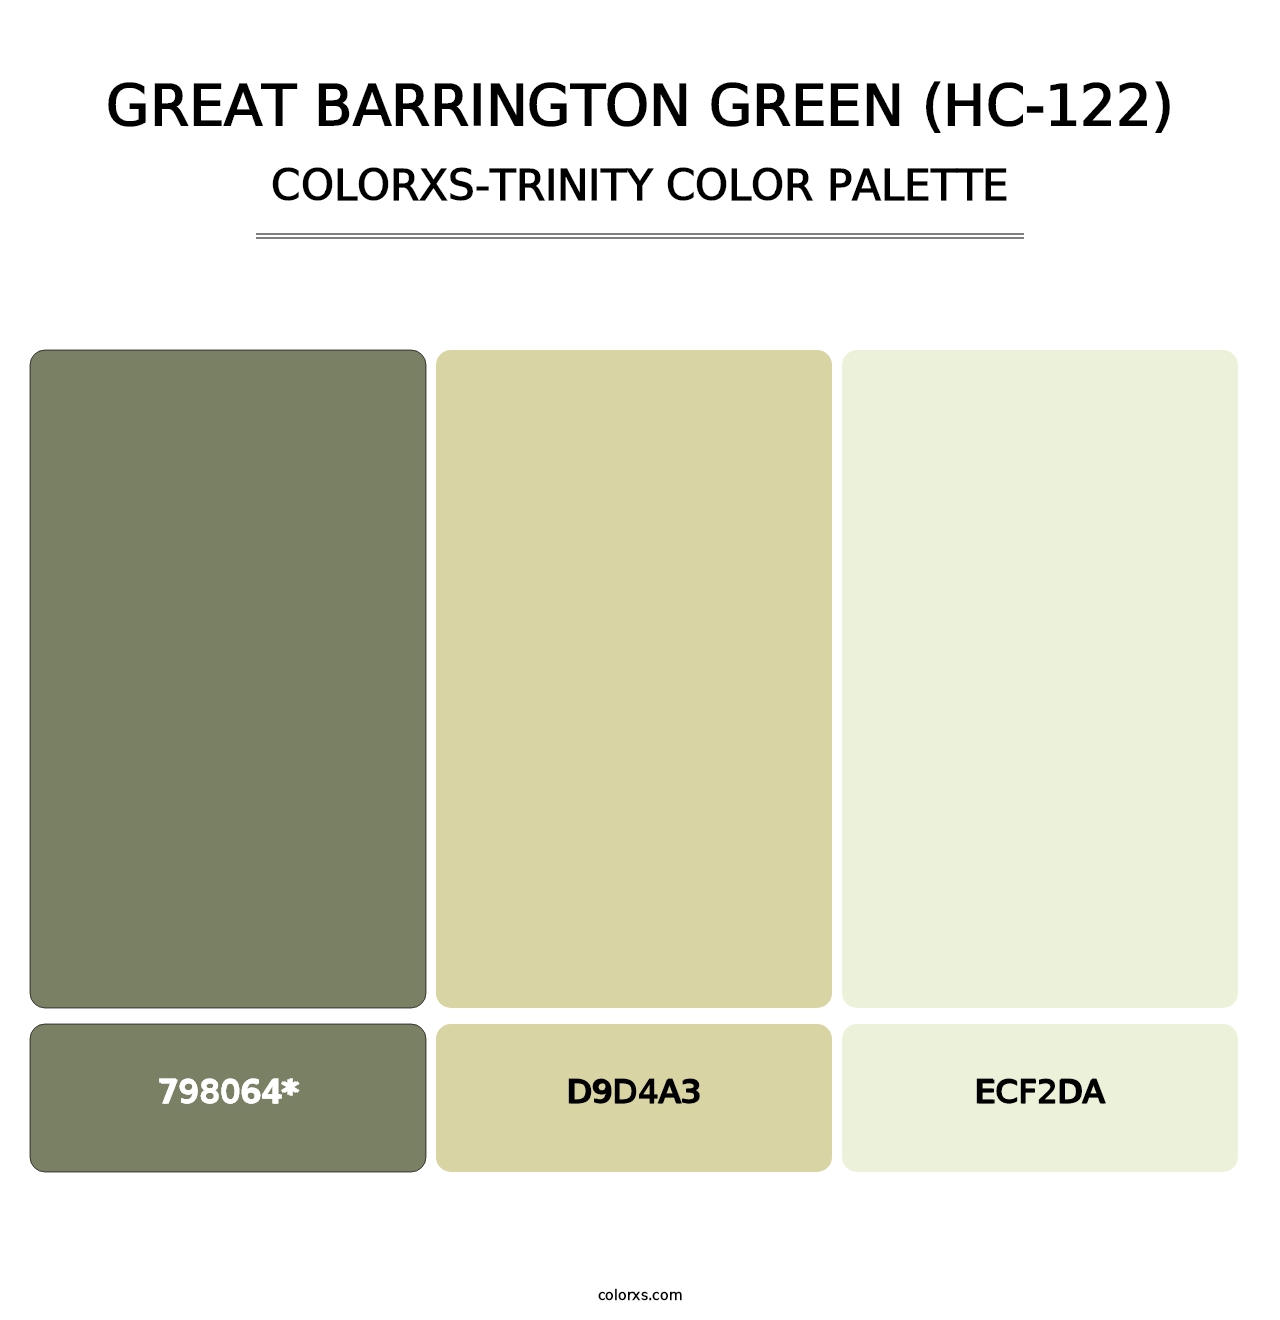 Great Barrington Green (HC-122) - Colorxs Trinity Palette